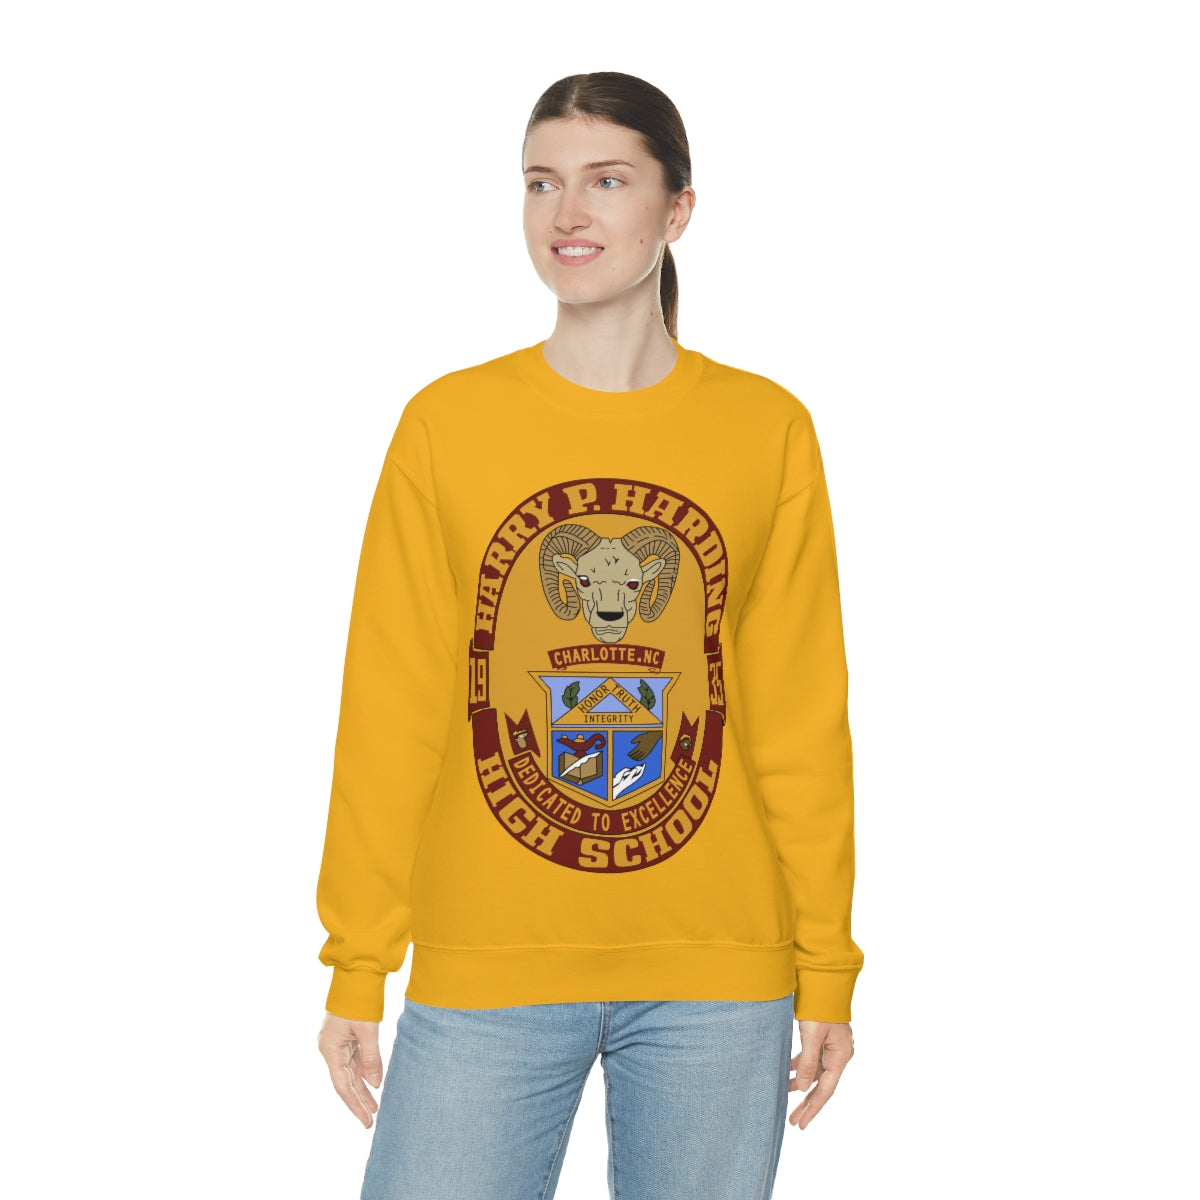 Vintage Harding High School Crewneck Sweatshirt